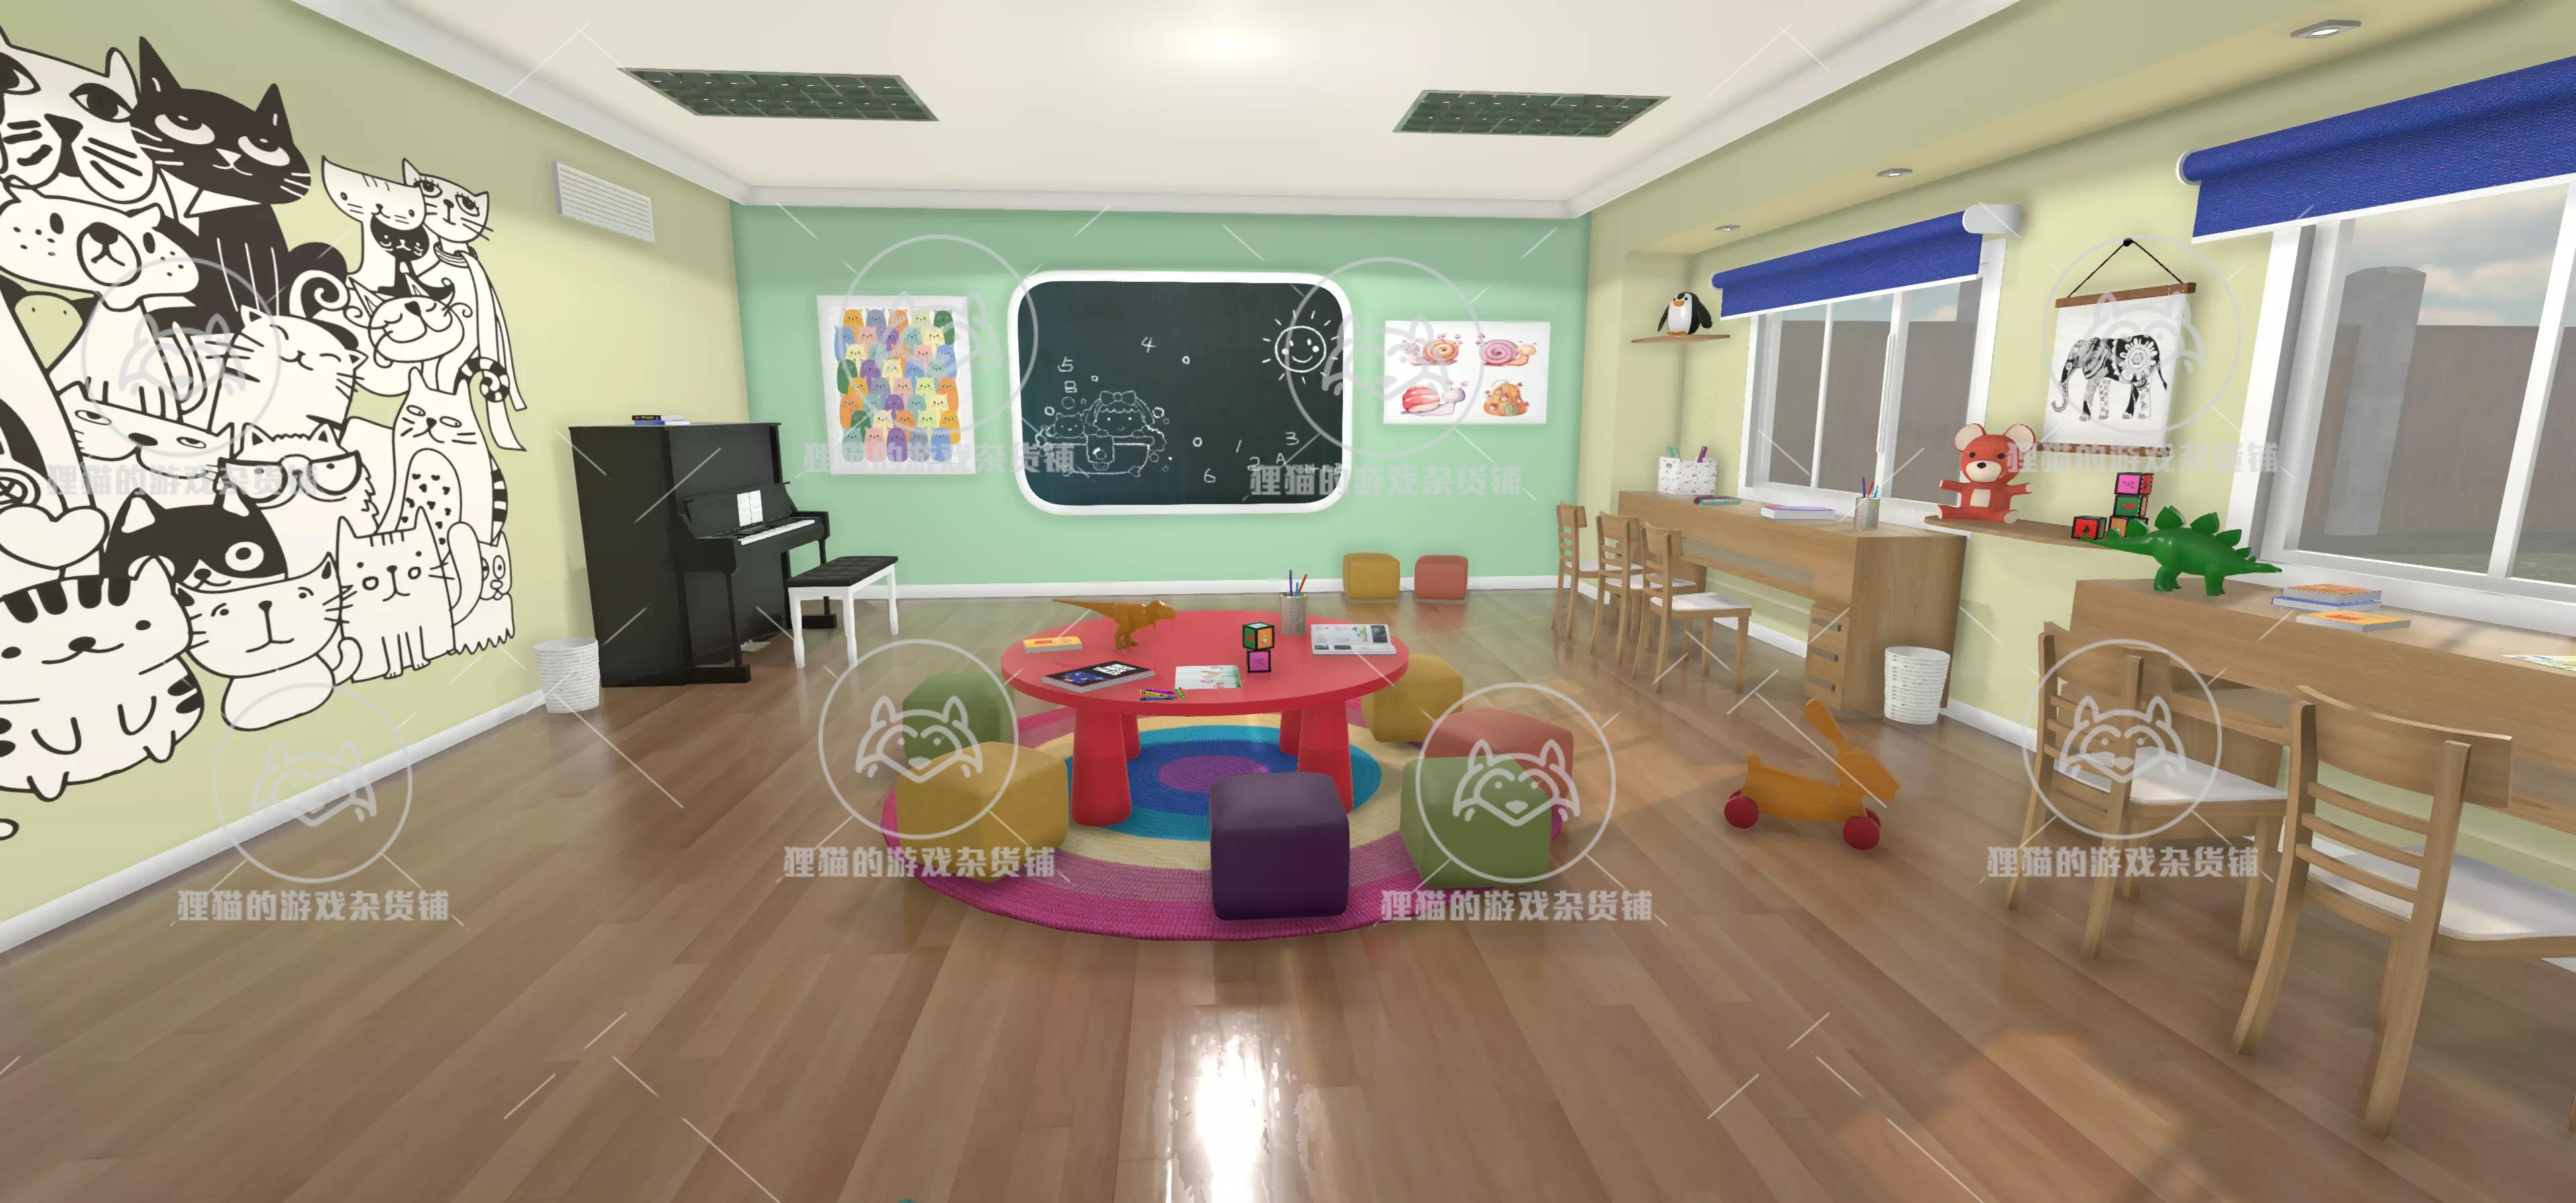 Unity Kids classroom 1.0 包更新 儿童教室活动空间场景 - 图0